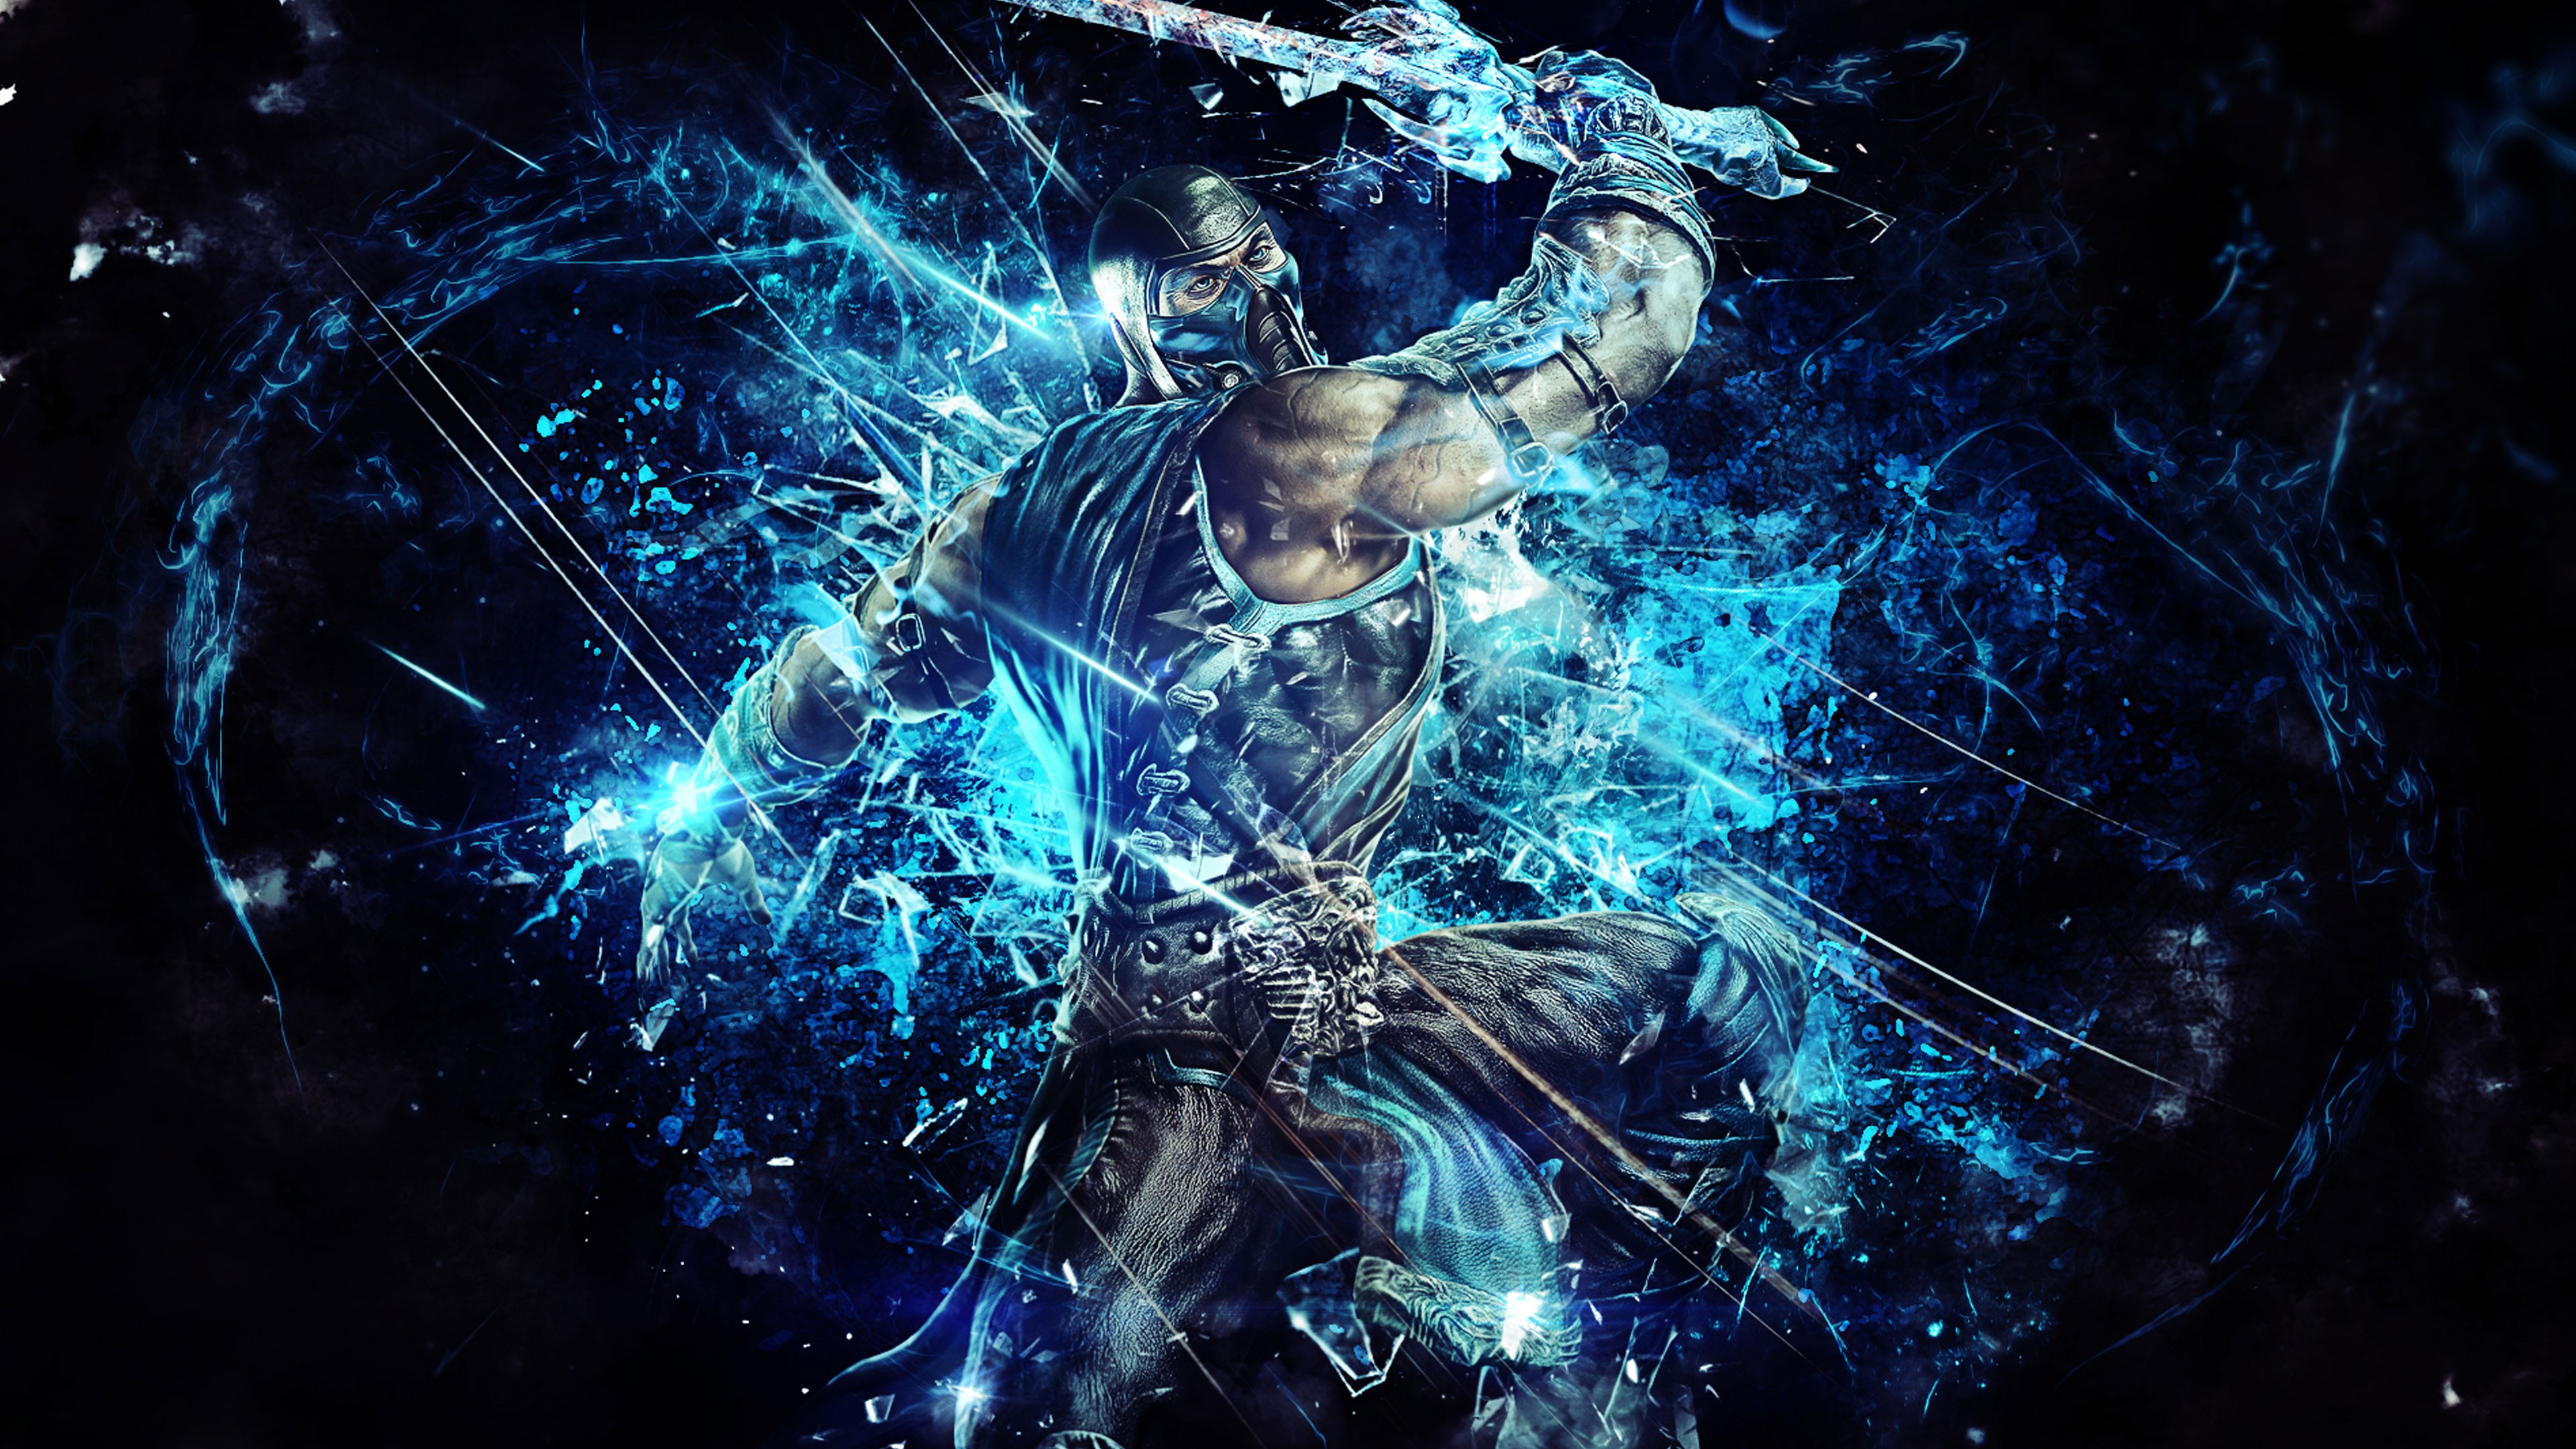 Sub Zero Mortal Kombat Video Game Art Wallpaper Hd Games 4k Wallpapers ...